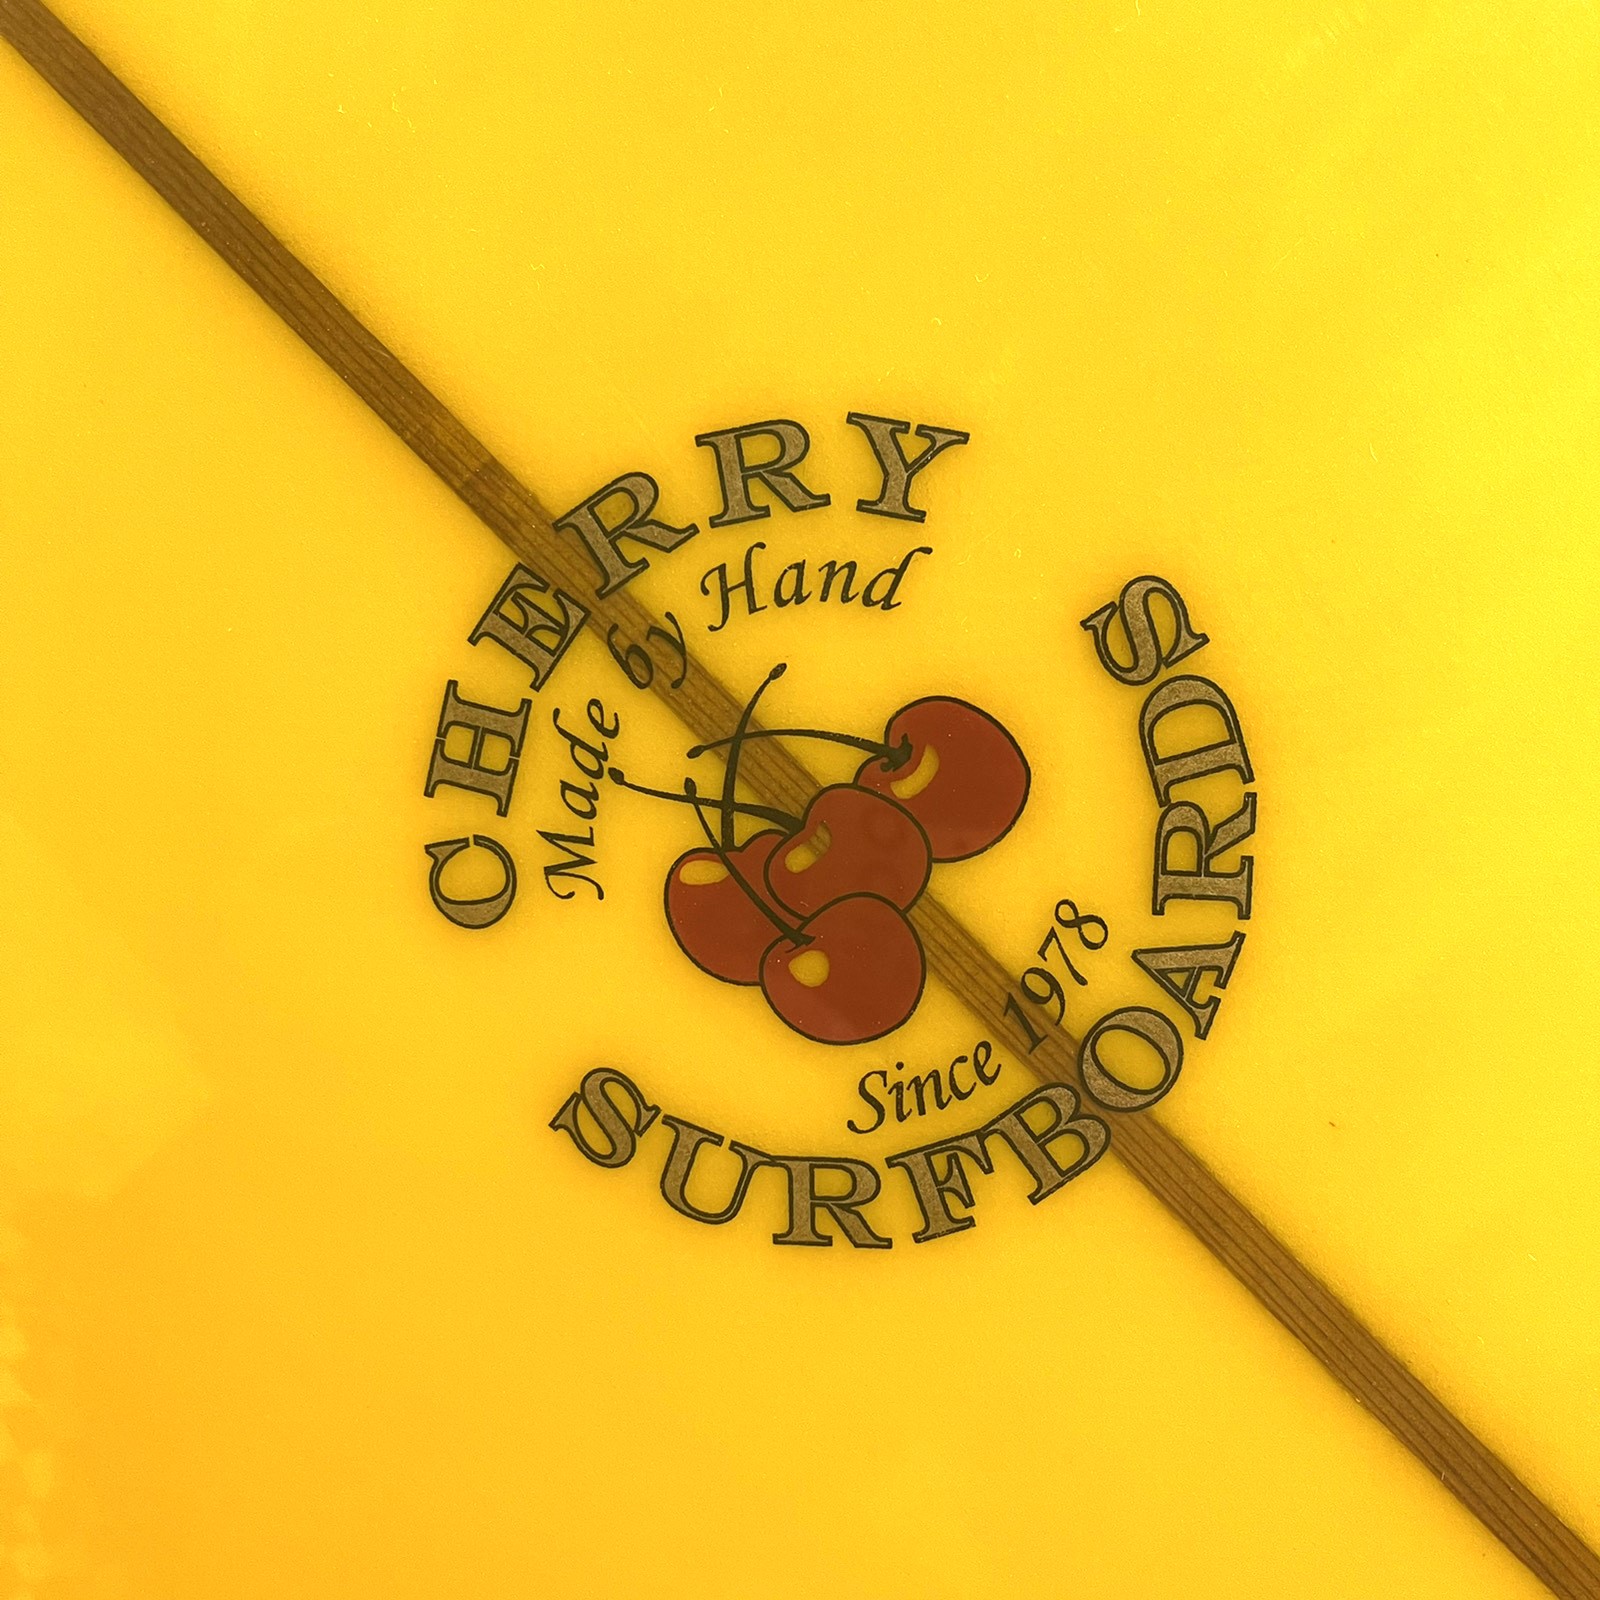 CHERRY SURFBOARDS / SIMM21 7`2